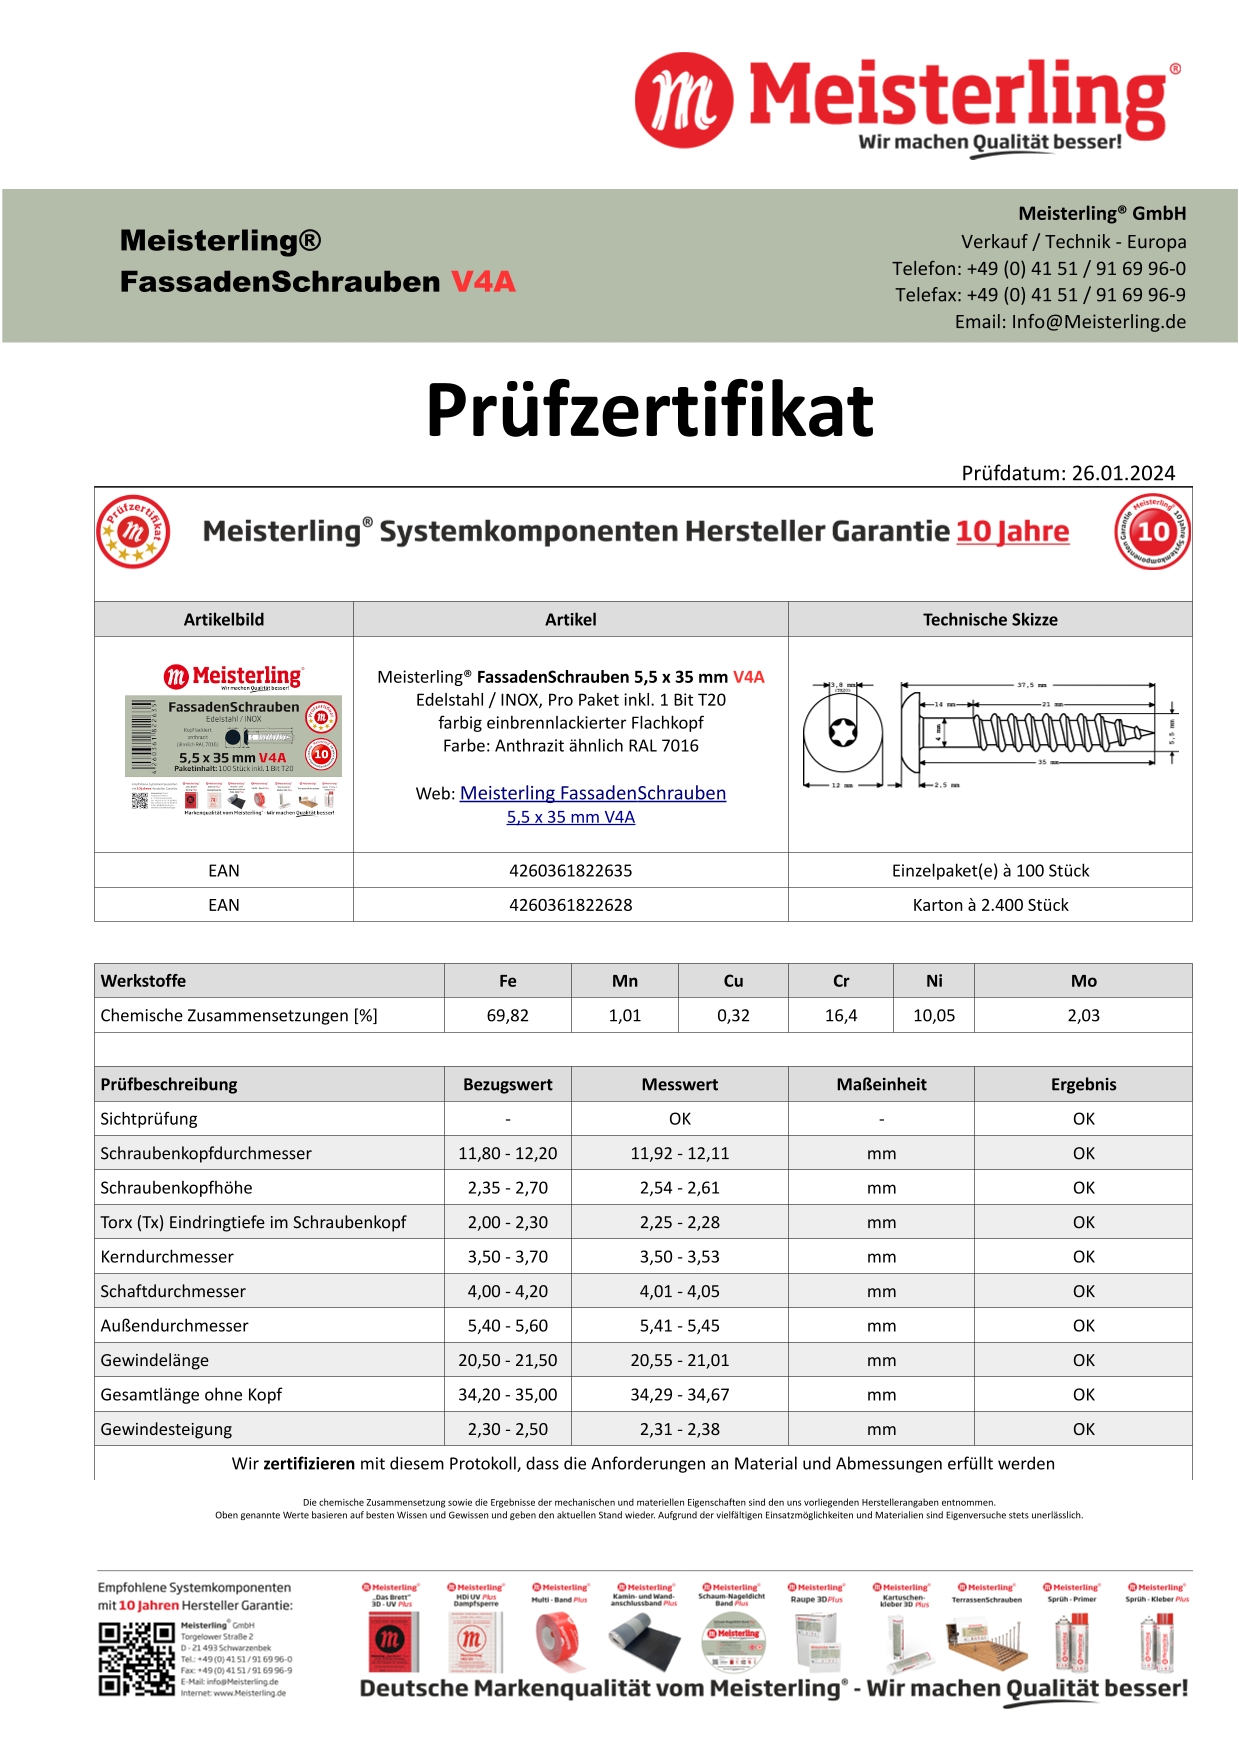 Prüfzertifikat Meisterling® FassadenSchrauben 5,5 x 35 mm V4a anthrazit